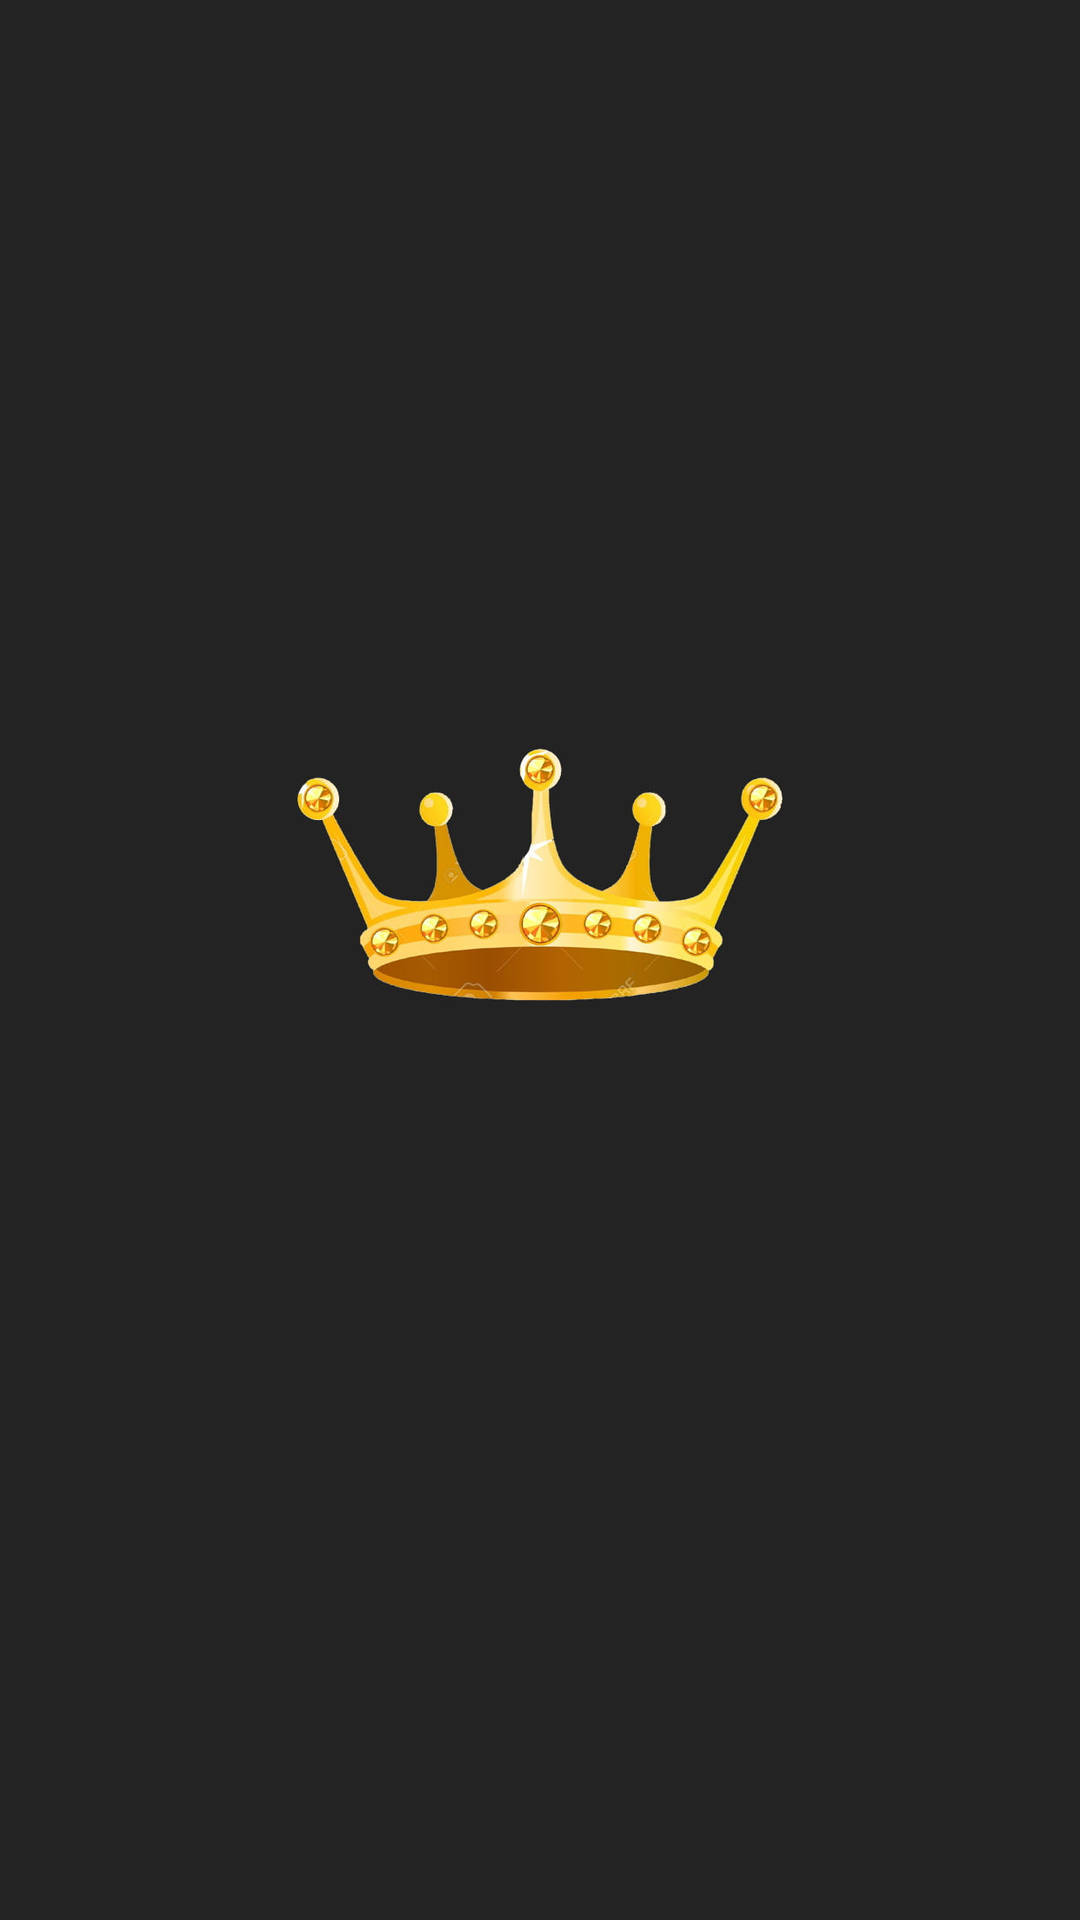 Crown With Long Tips Black Queen Wallpaper